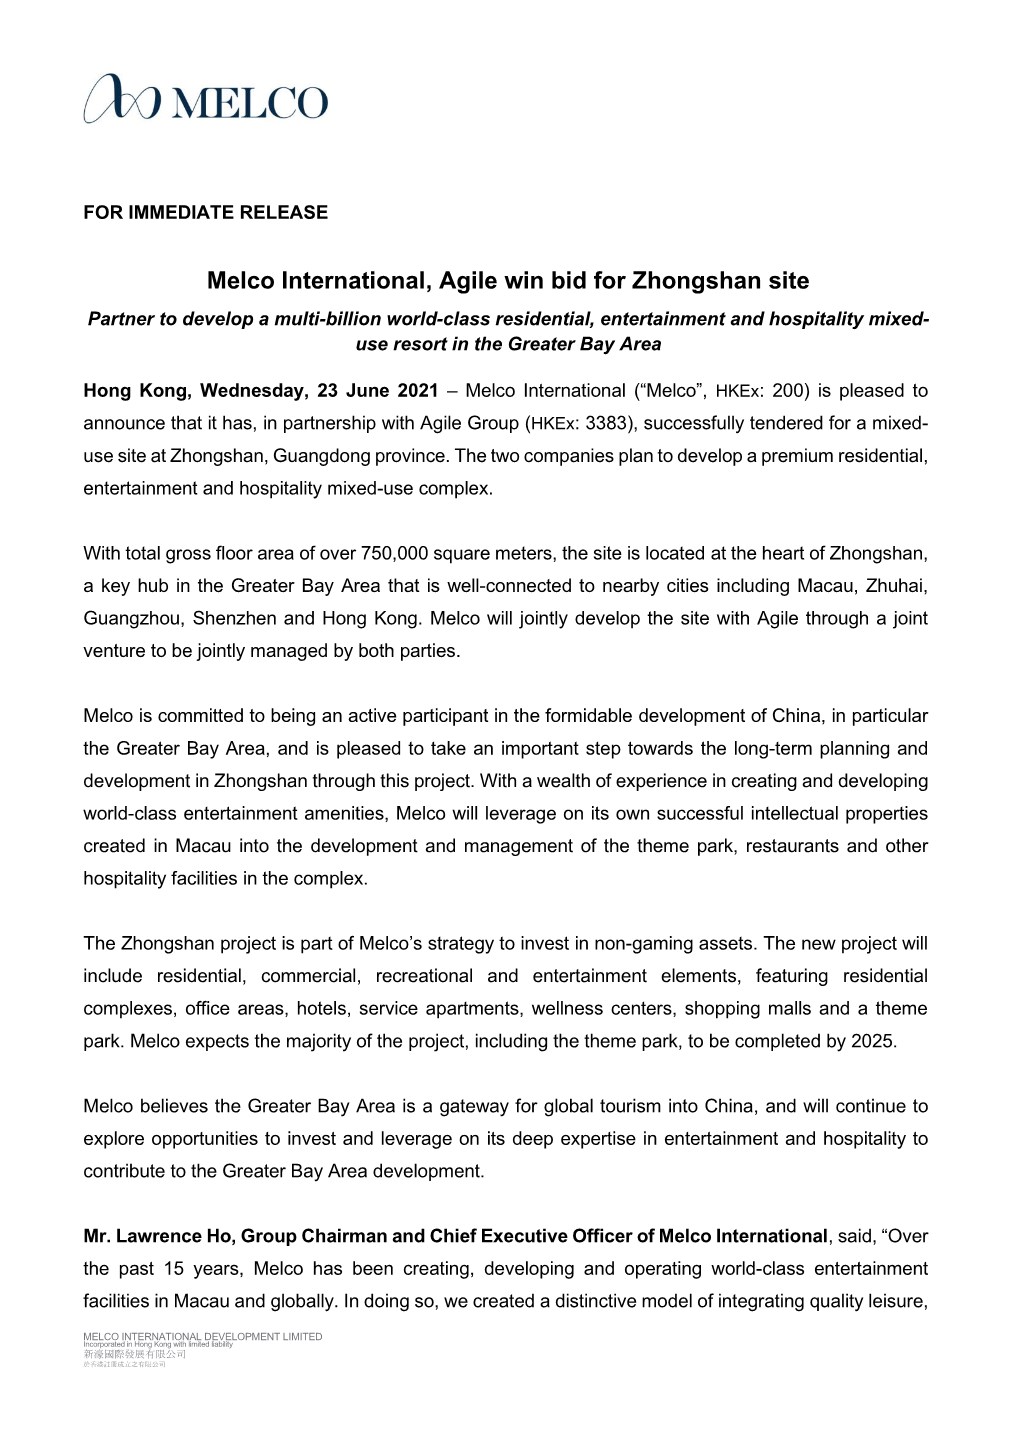 Melco International, Agile Win Bid for Zhongshan Site